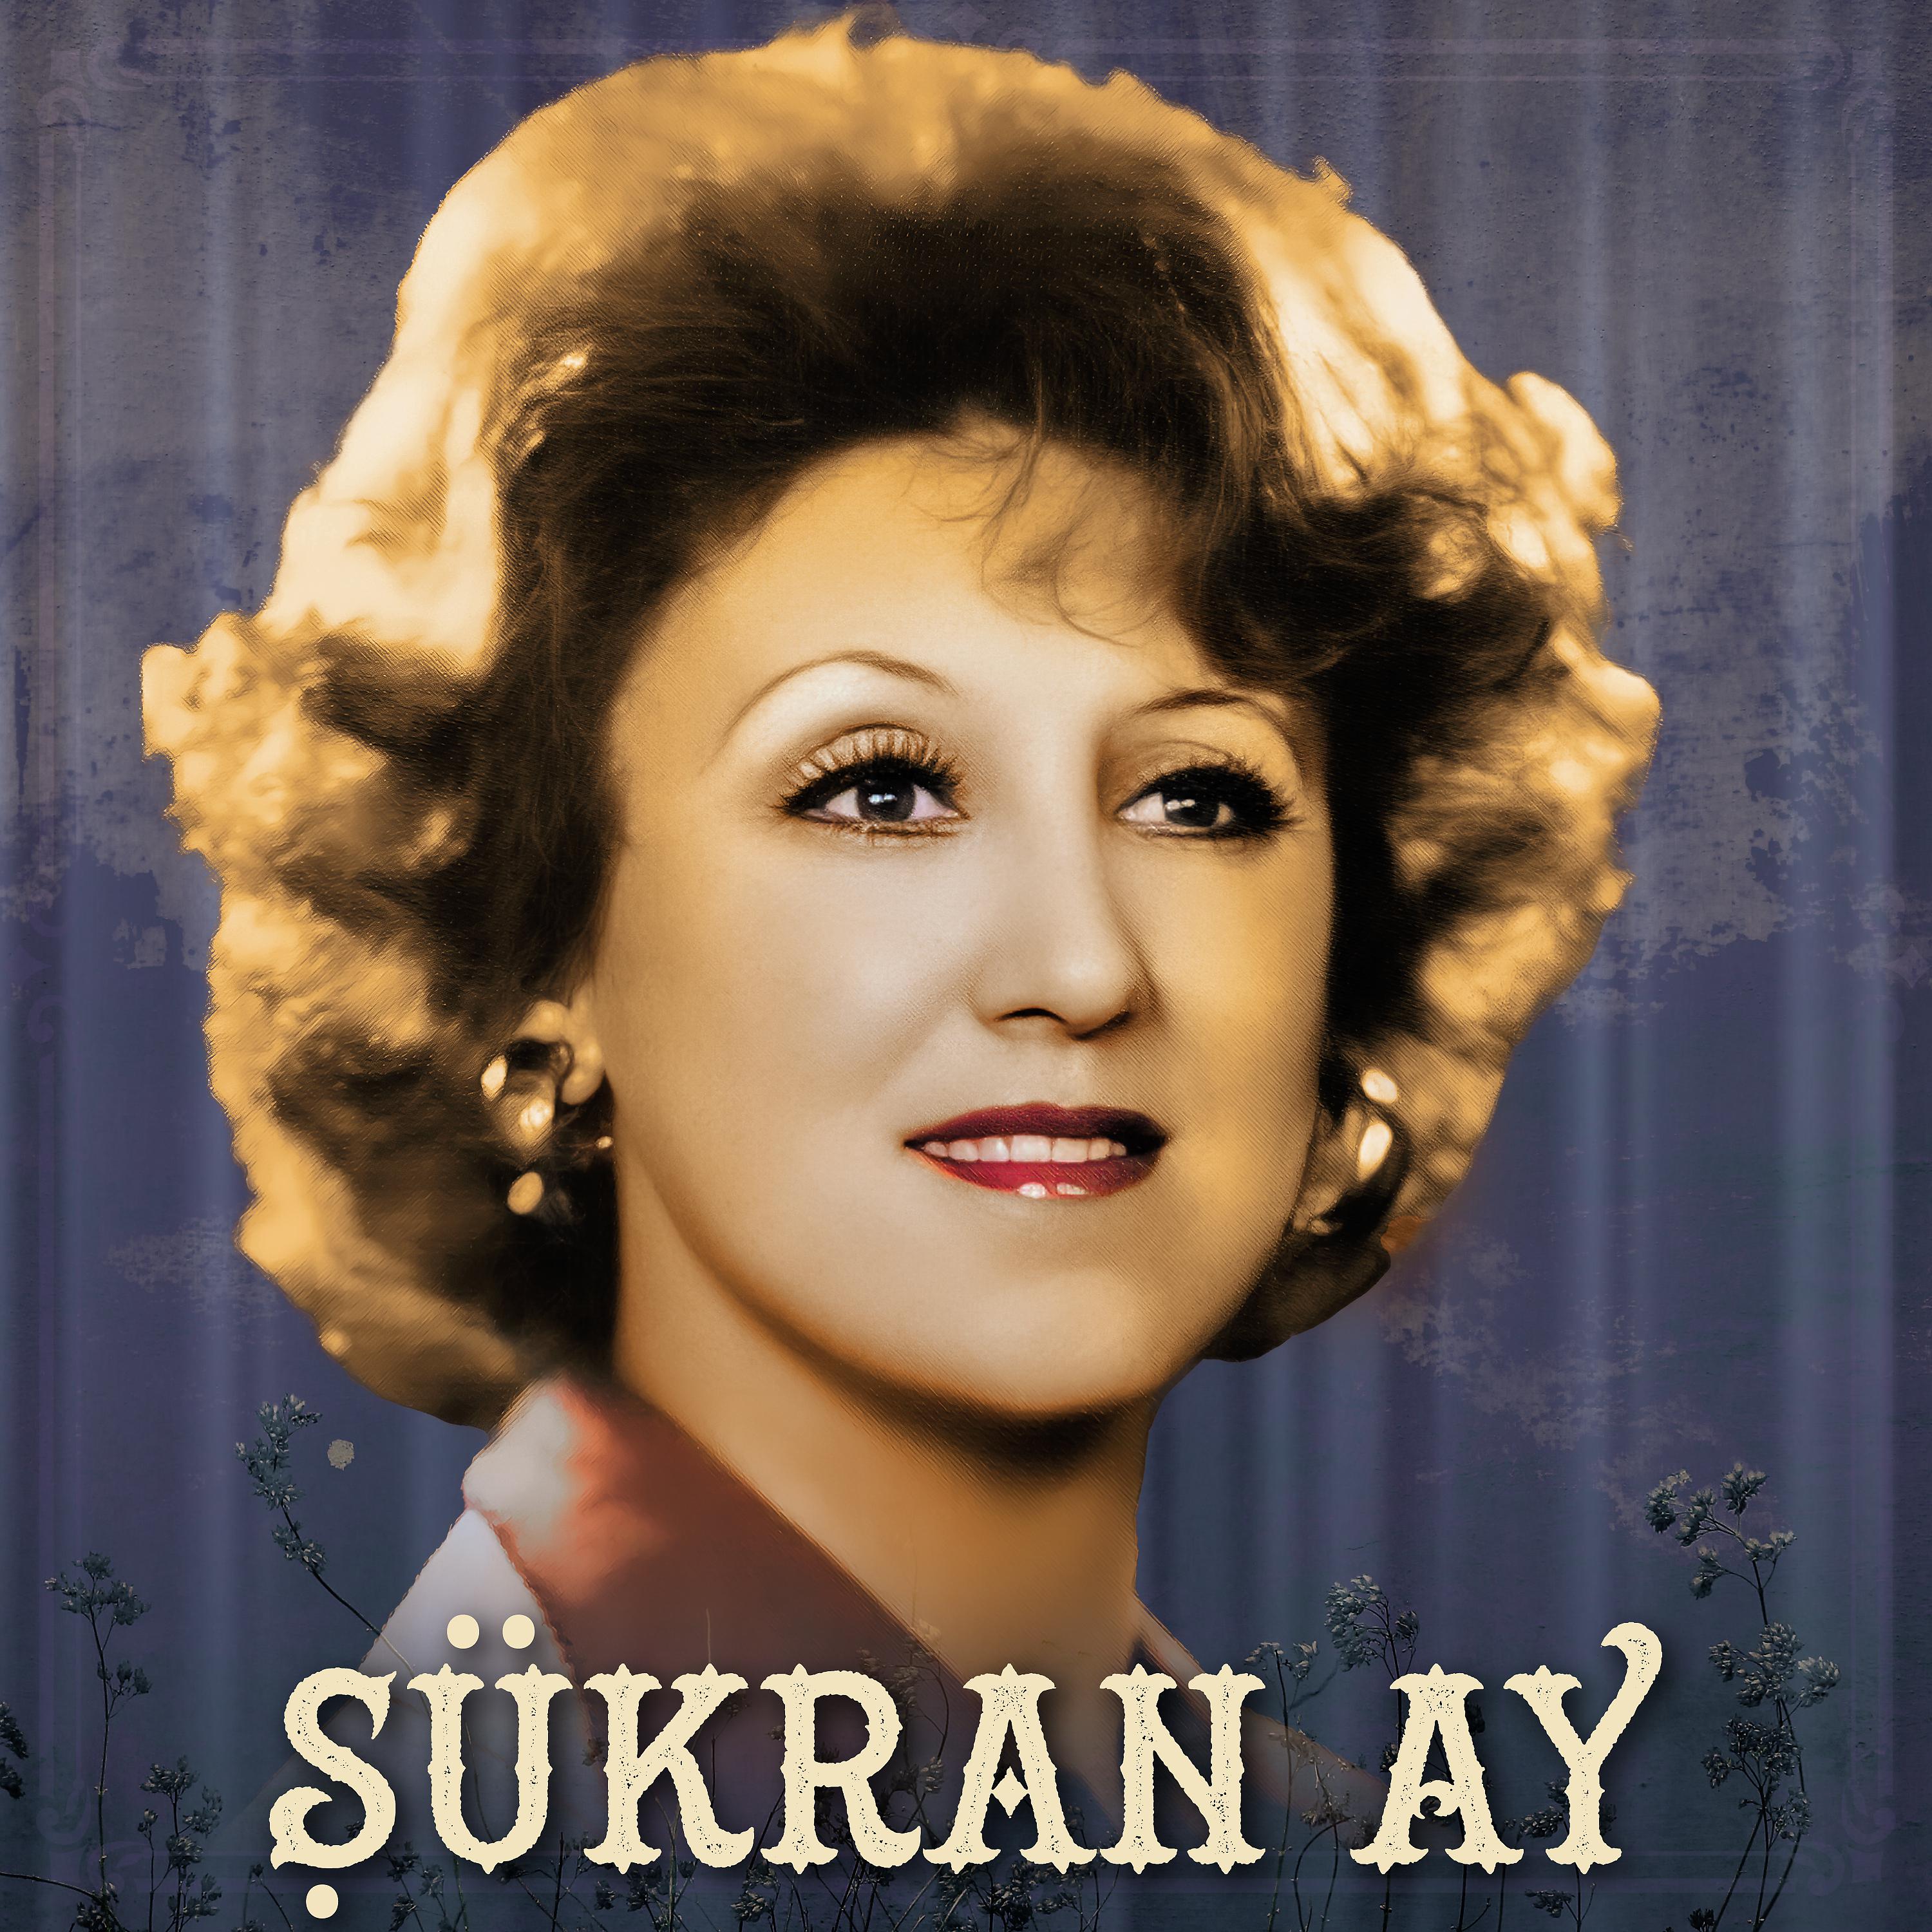 Постер альбома Adaletin Bu Mu Dünya